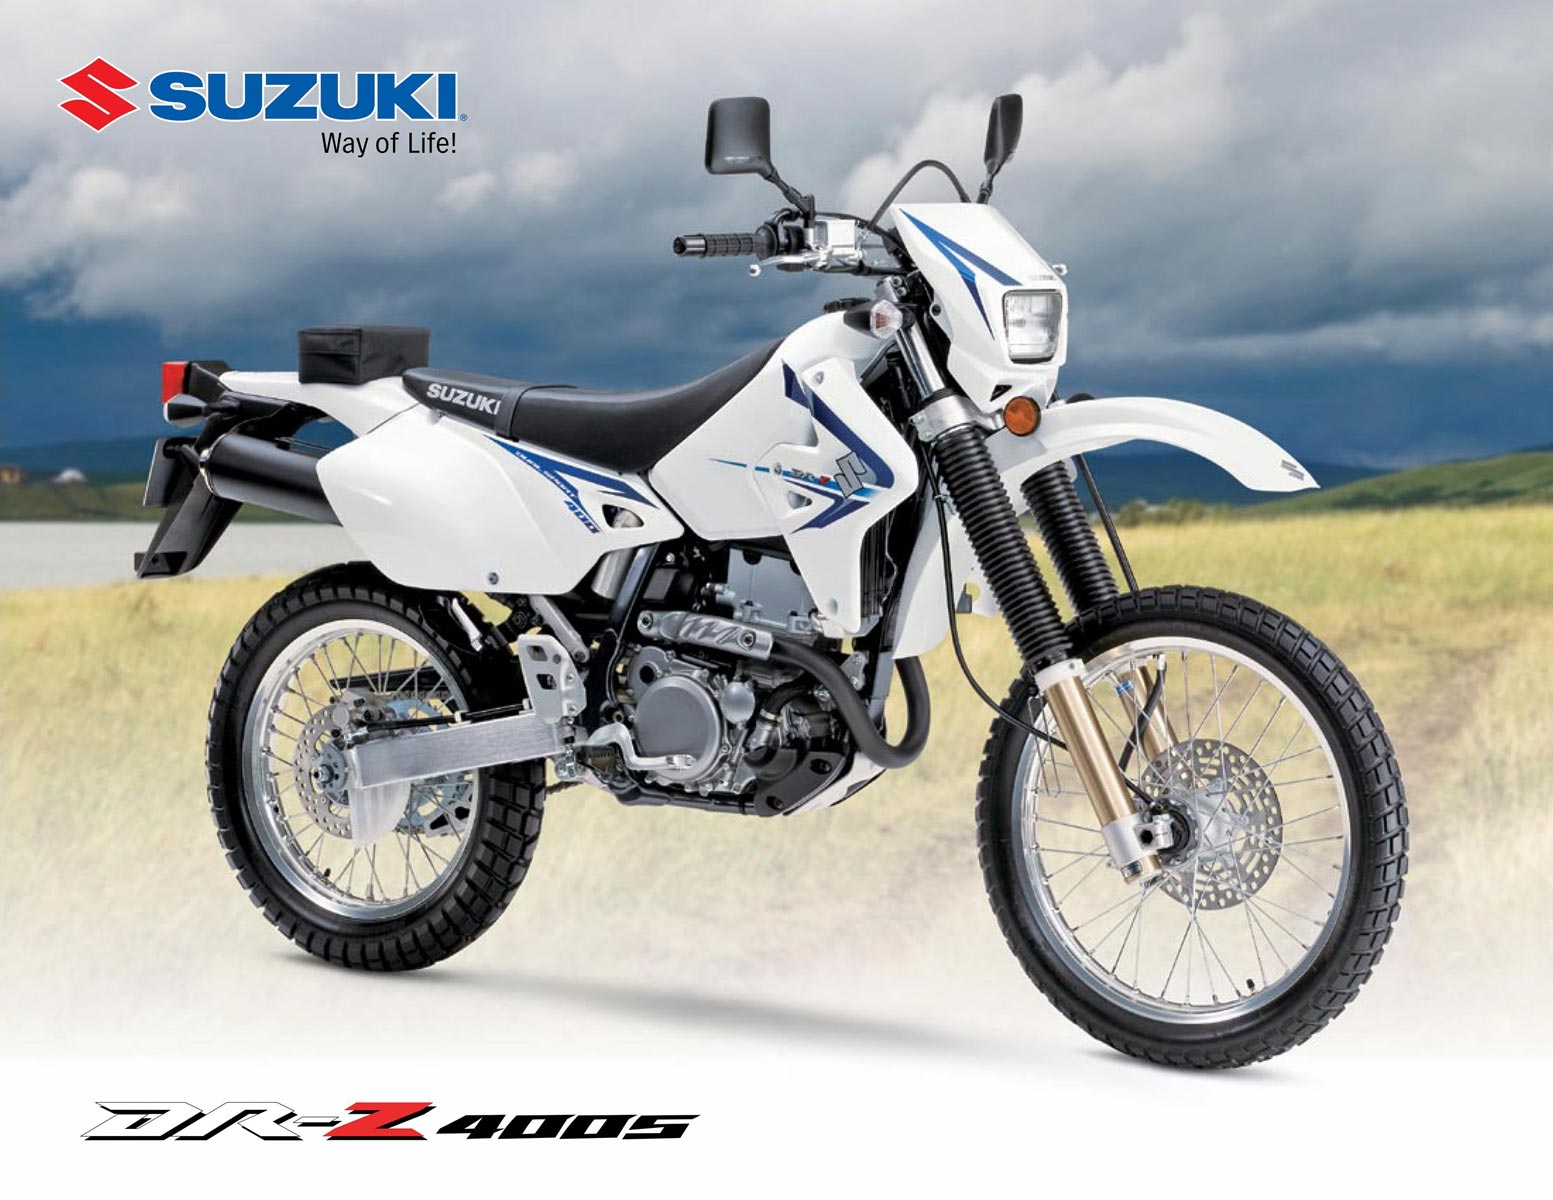 suzuki-drz400-graphics-2016